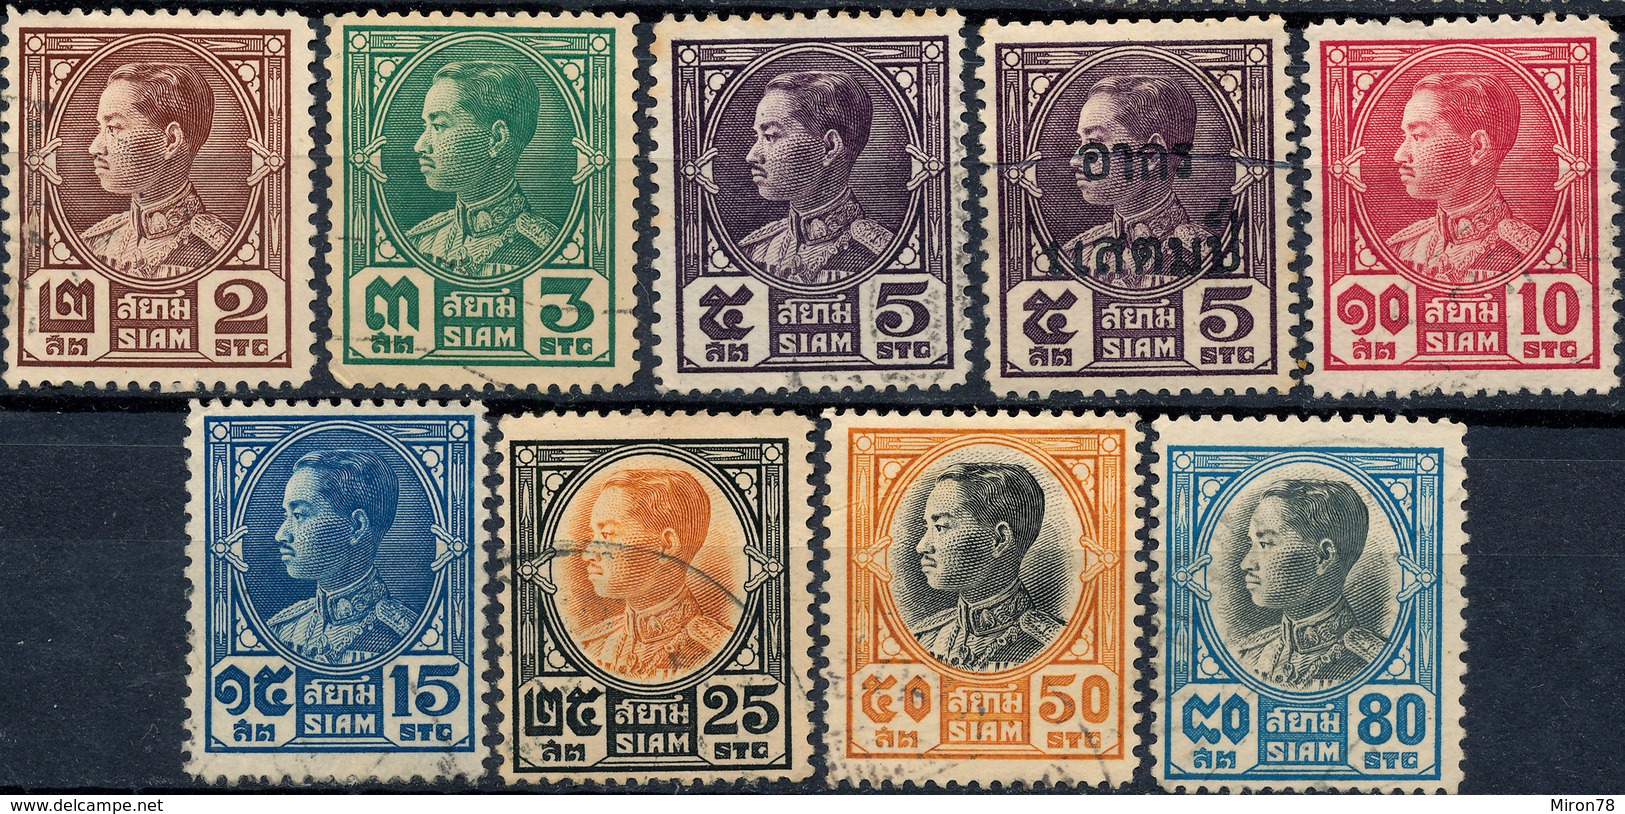 Stamp Siam, Thailand 1928  Used Lot101 - Thaïlande